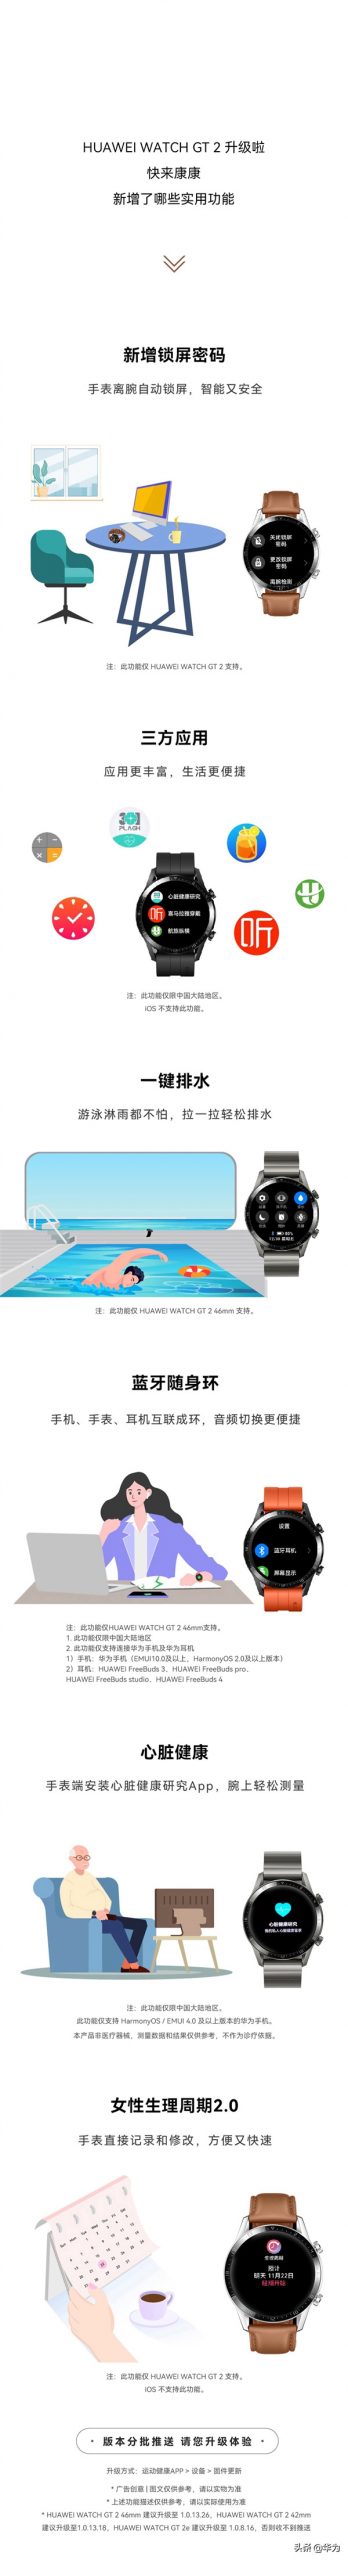 Huawei Watch GT 2 Update